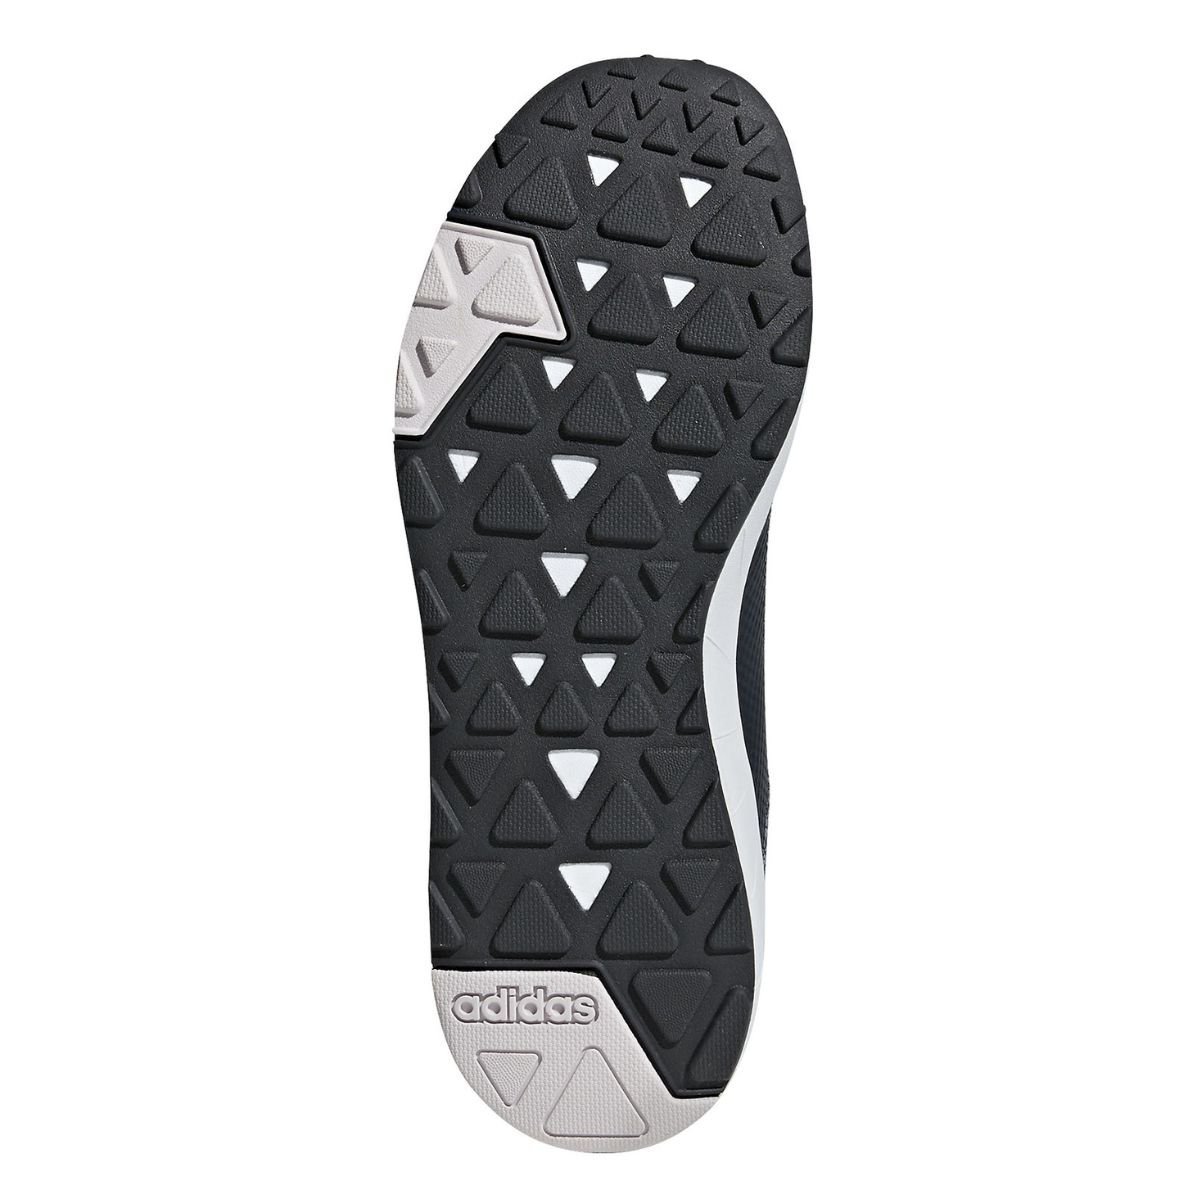 Obuv Adidas Questar X BYD - čierna/sivá